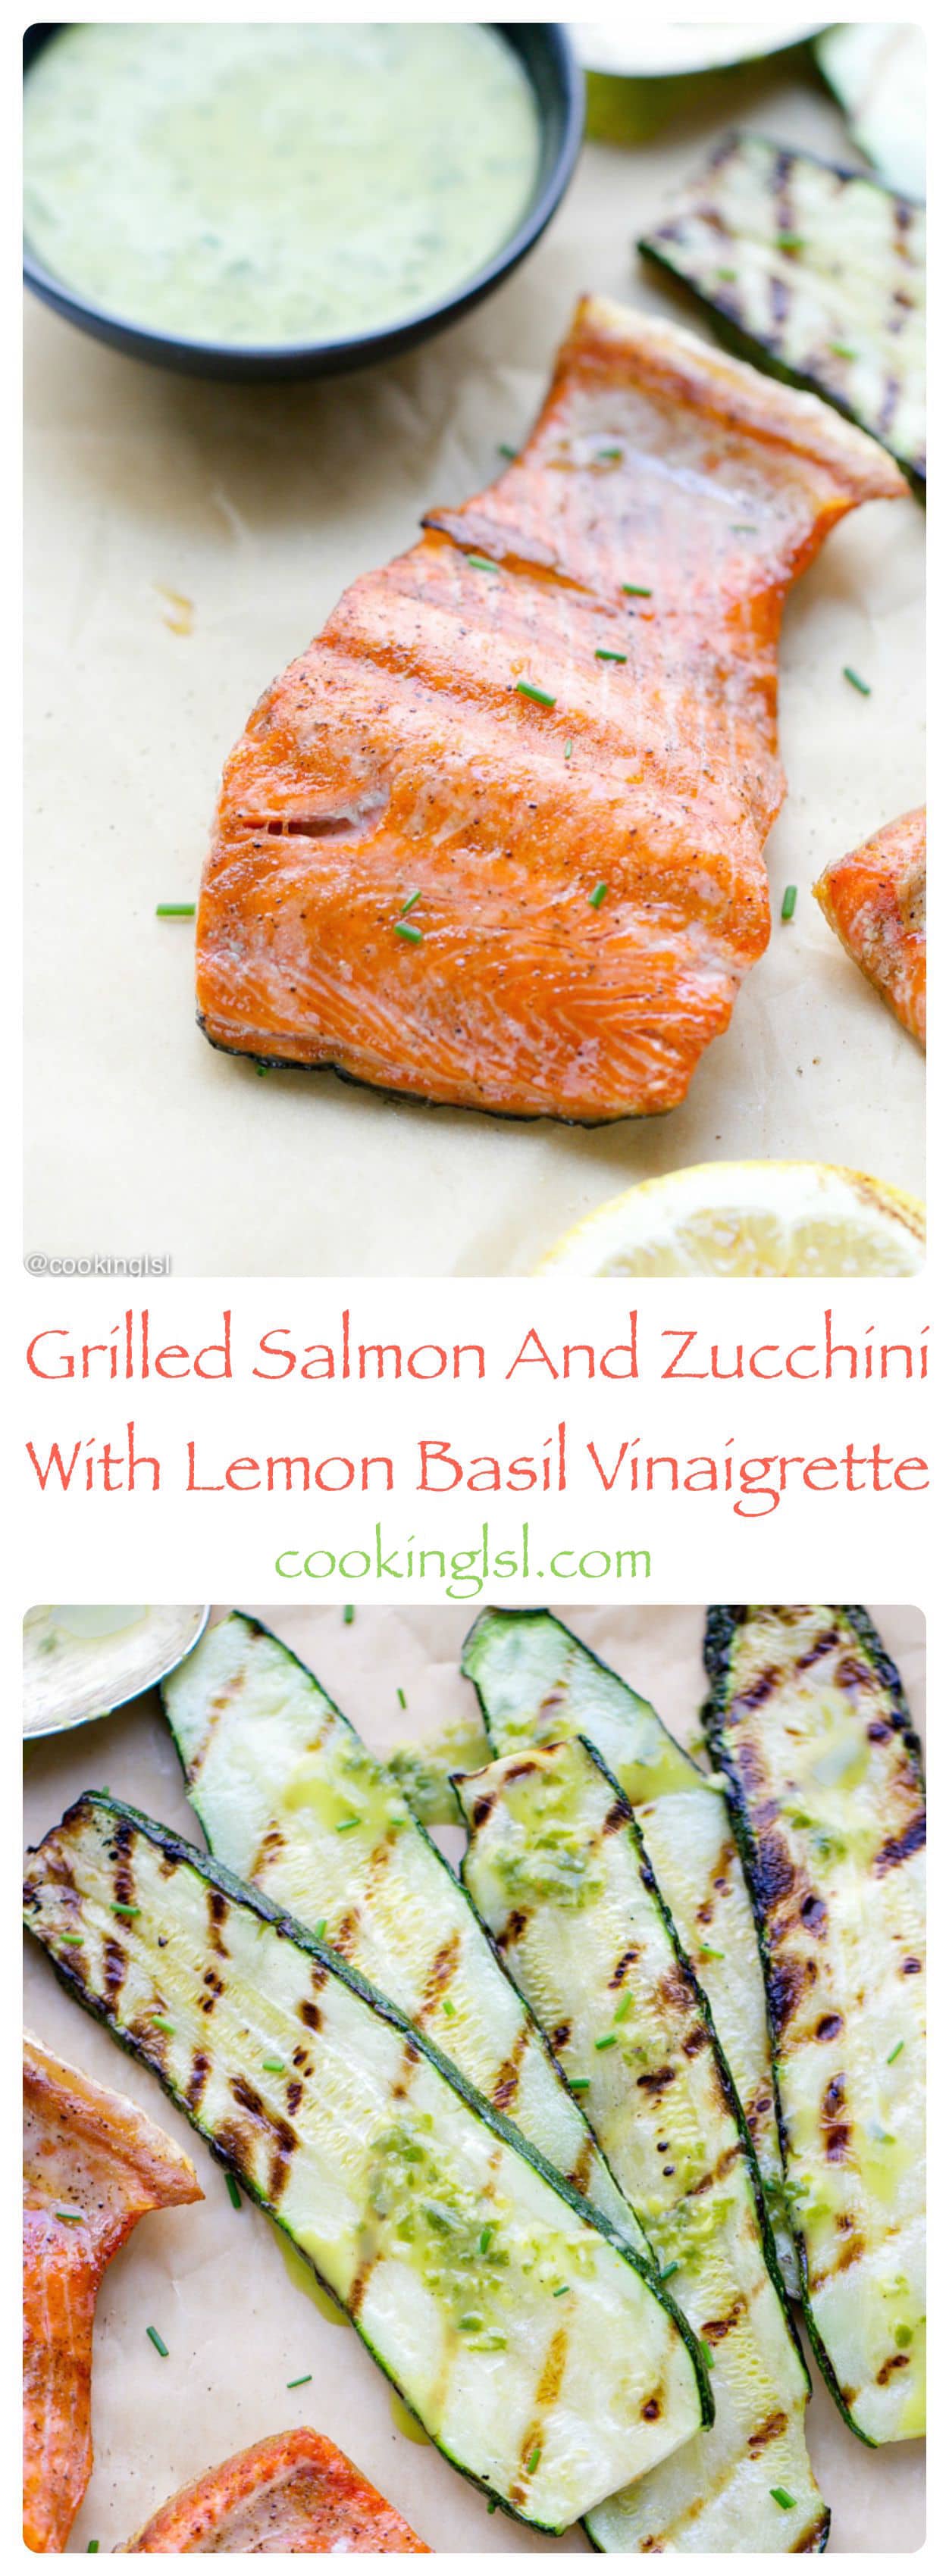 salmon-grilled-zucchini-lemon-basil-vinaigrette-recipe